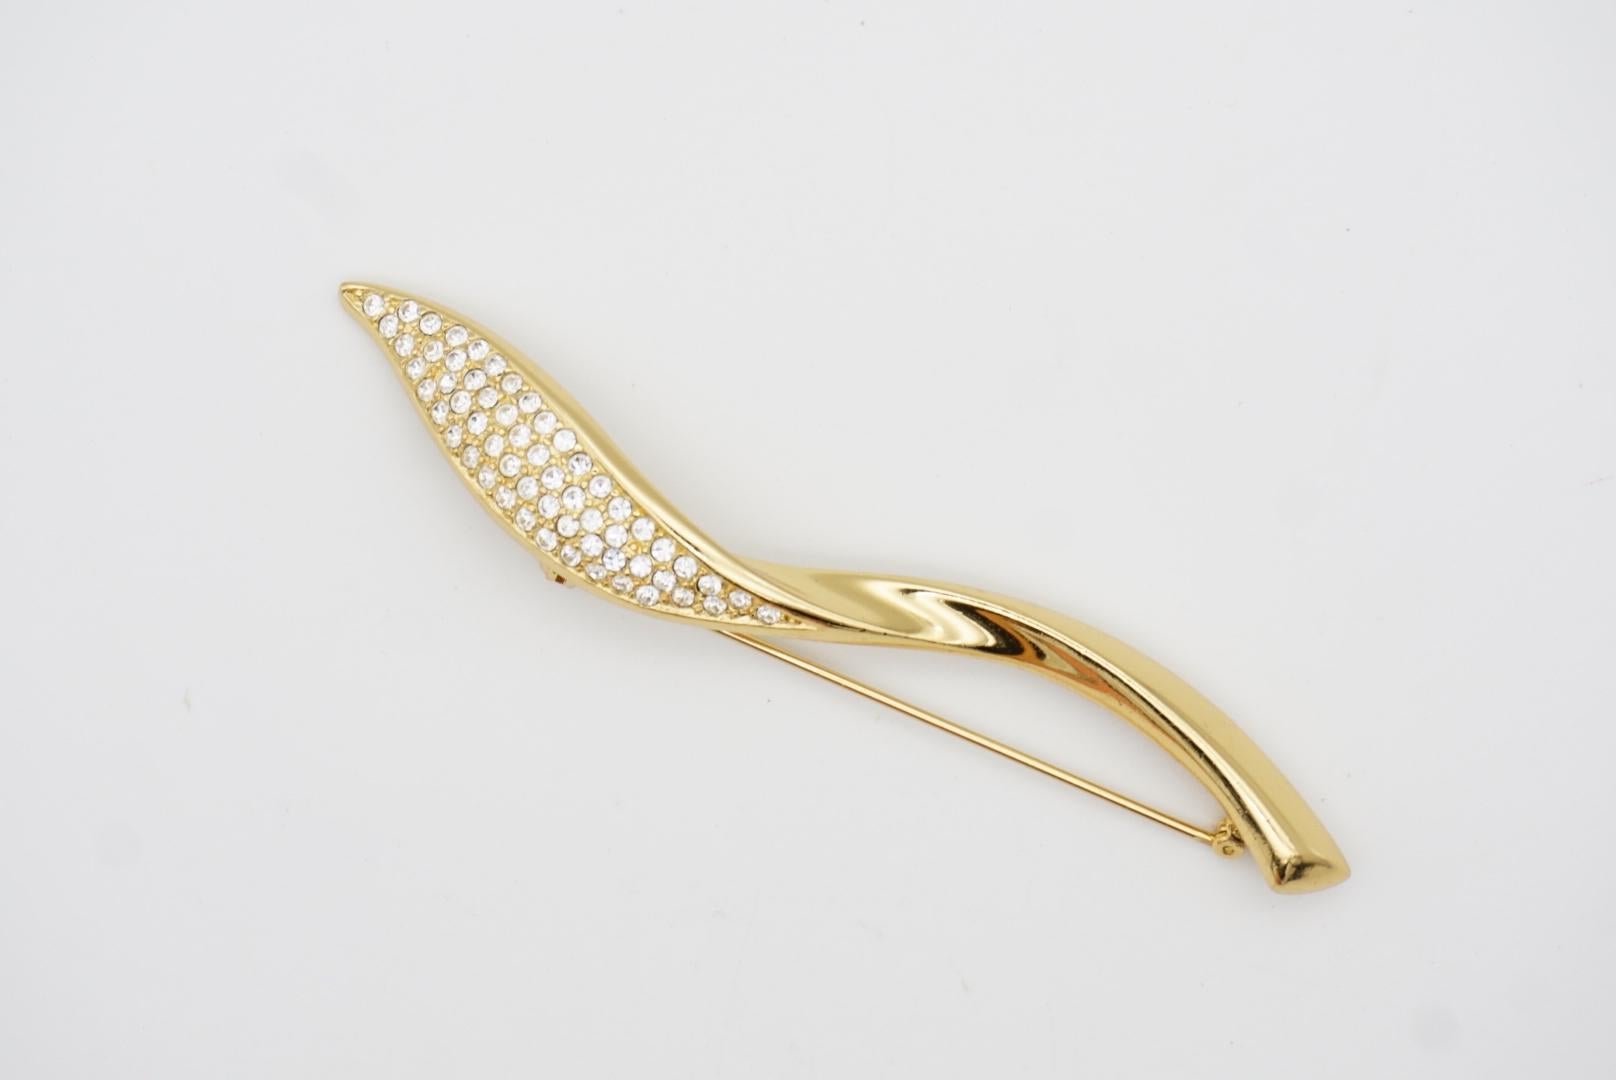 Christian Dior 1970s Vintage Large Long Swirl Leaf Flame Crystals Gold Brooch For Sale 1